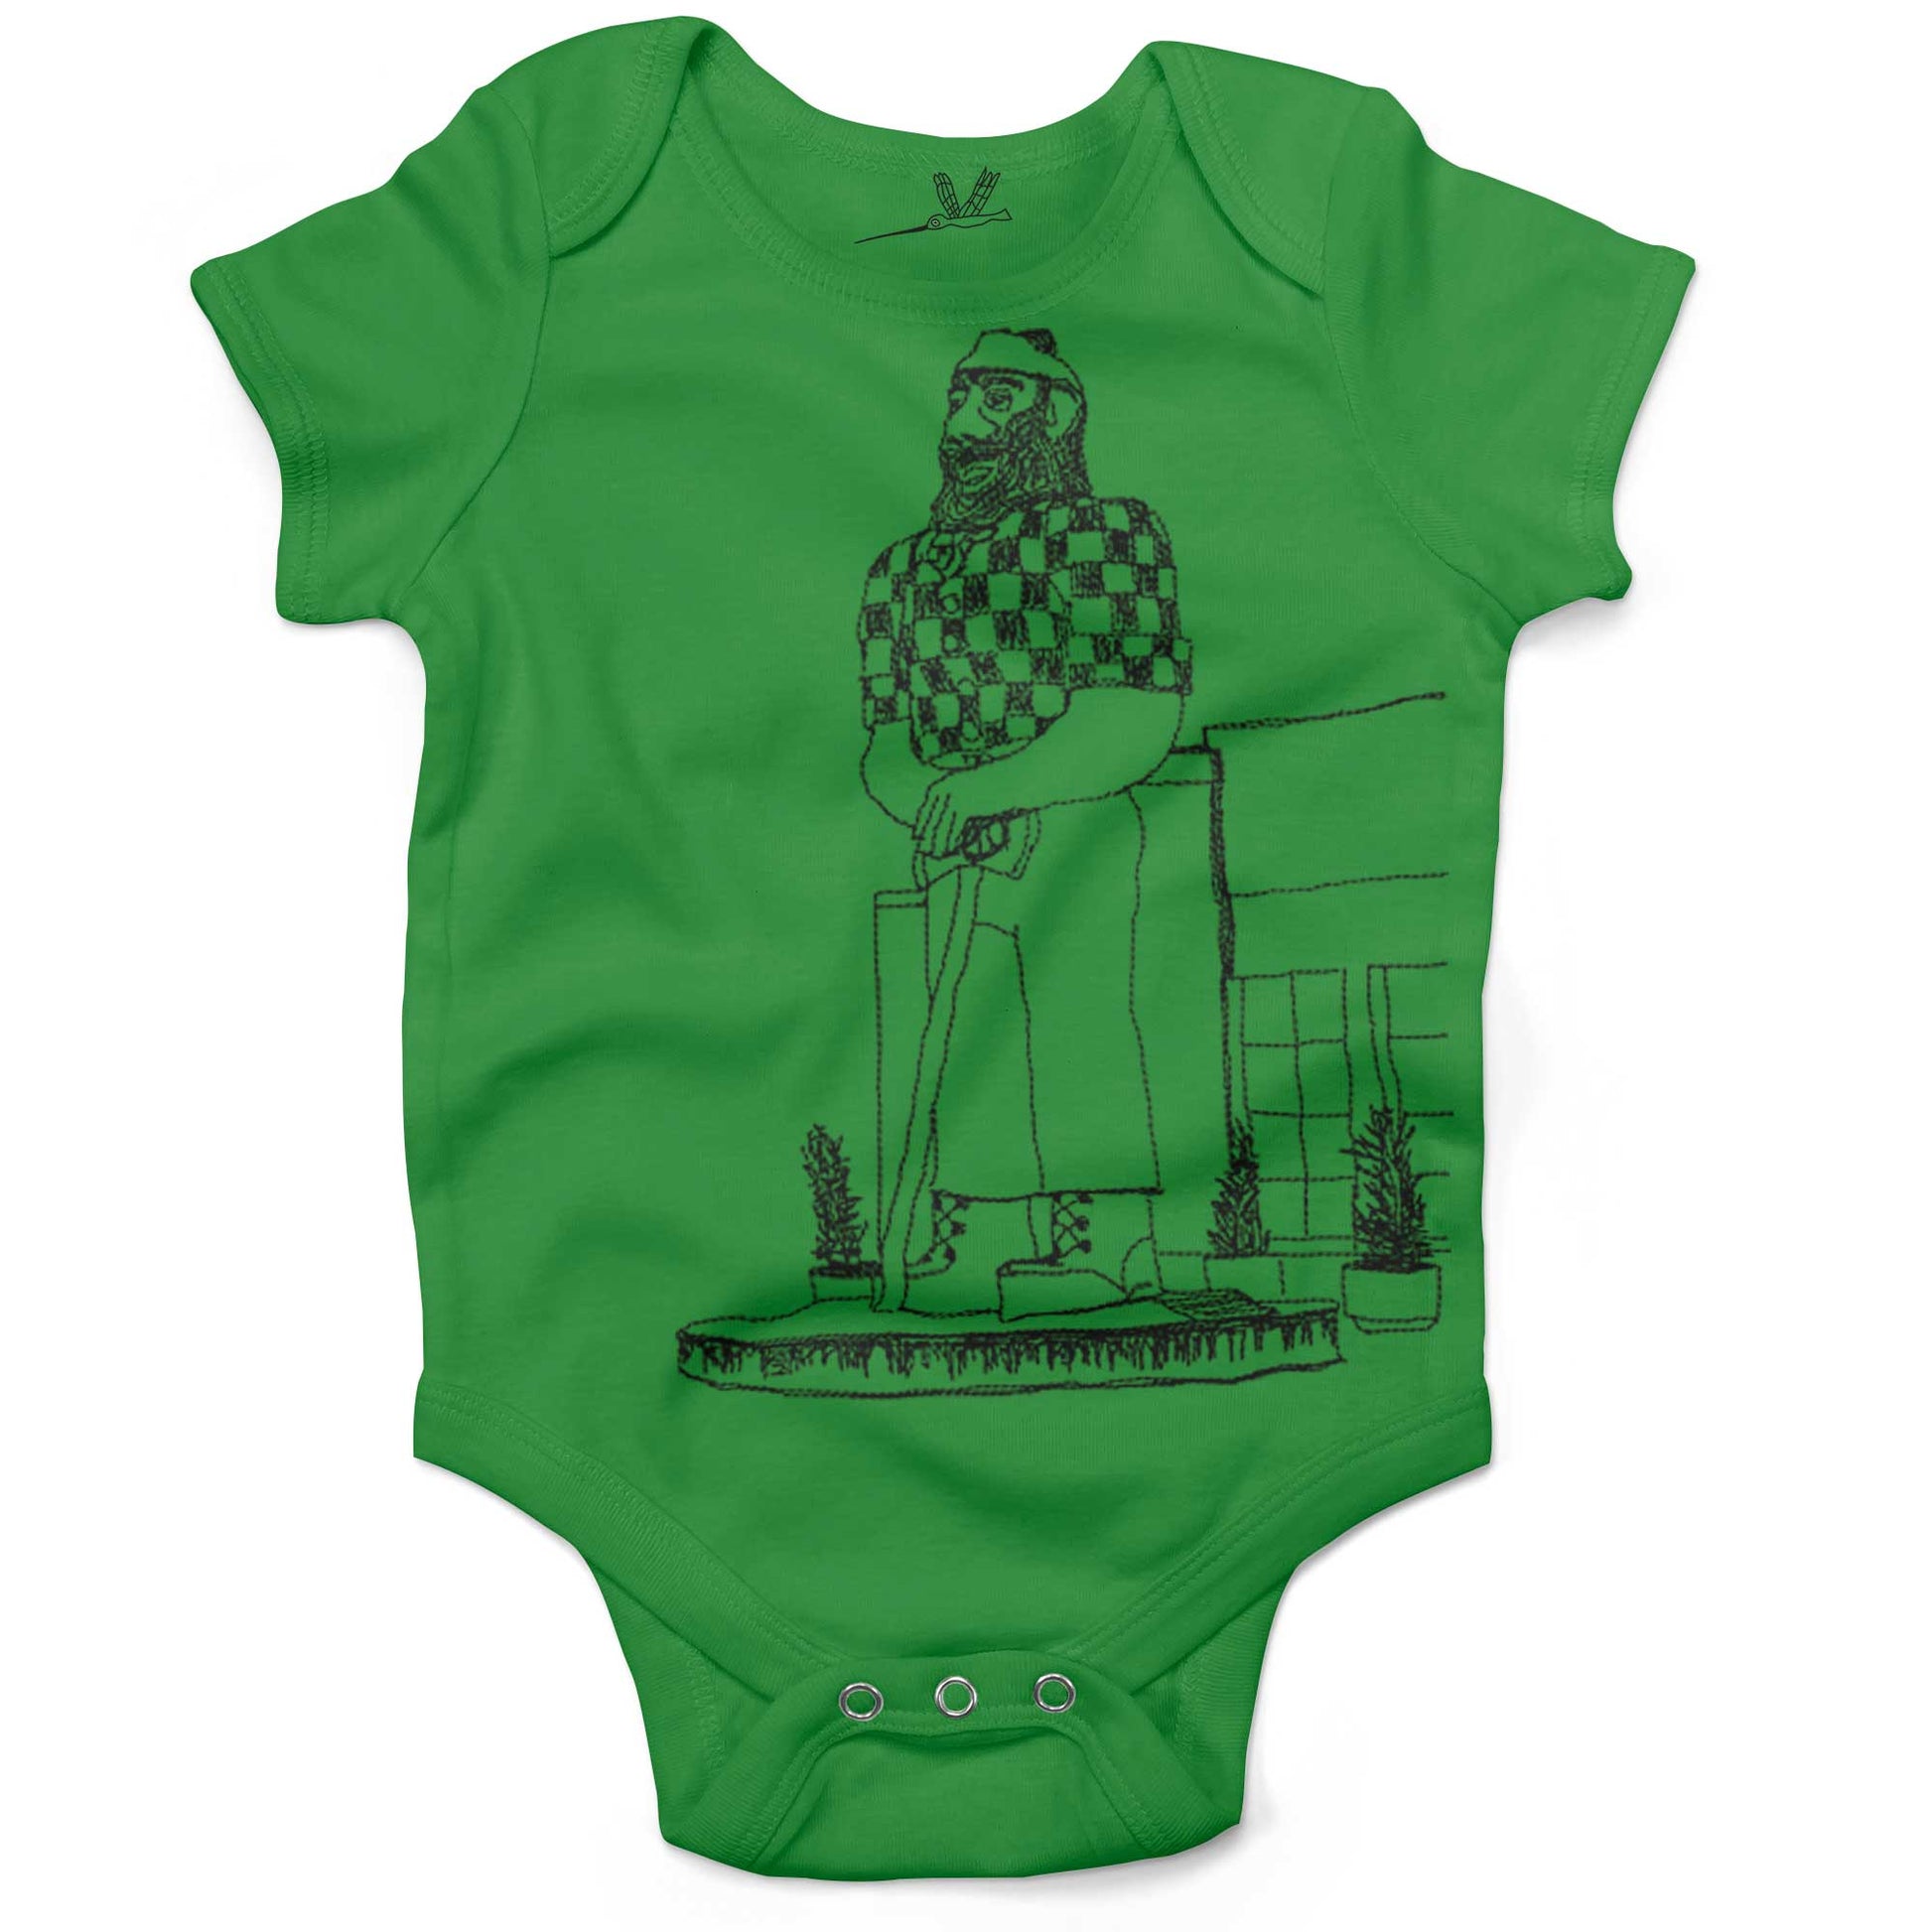 Paul Bunyan Infant Bodysuit or Raglan Baby Tee-Grass Green-3-6 months